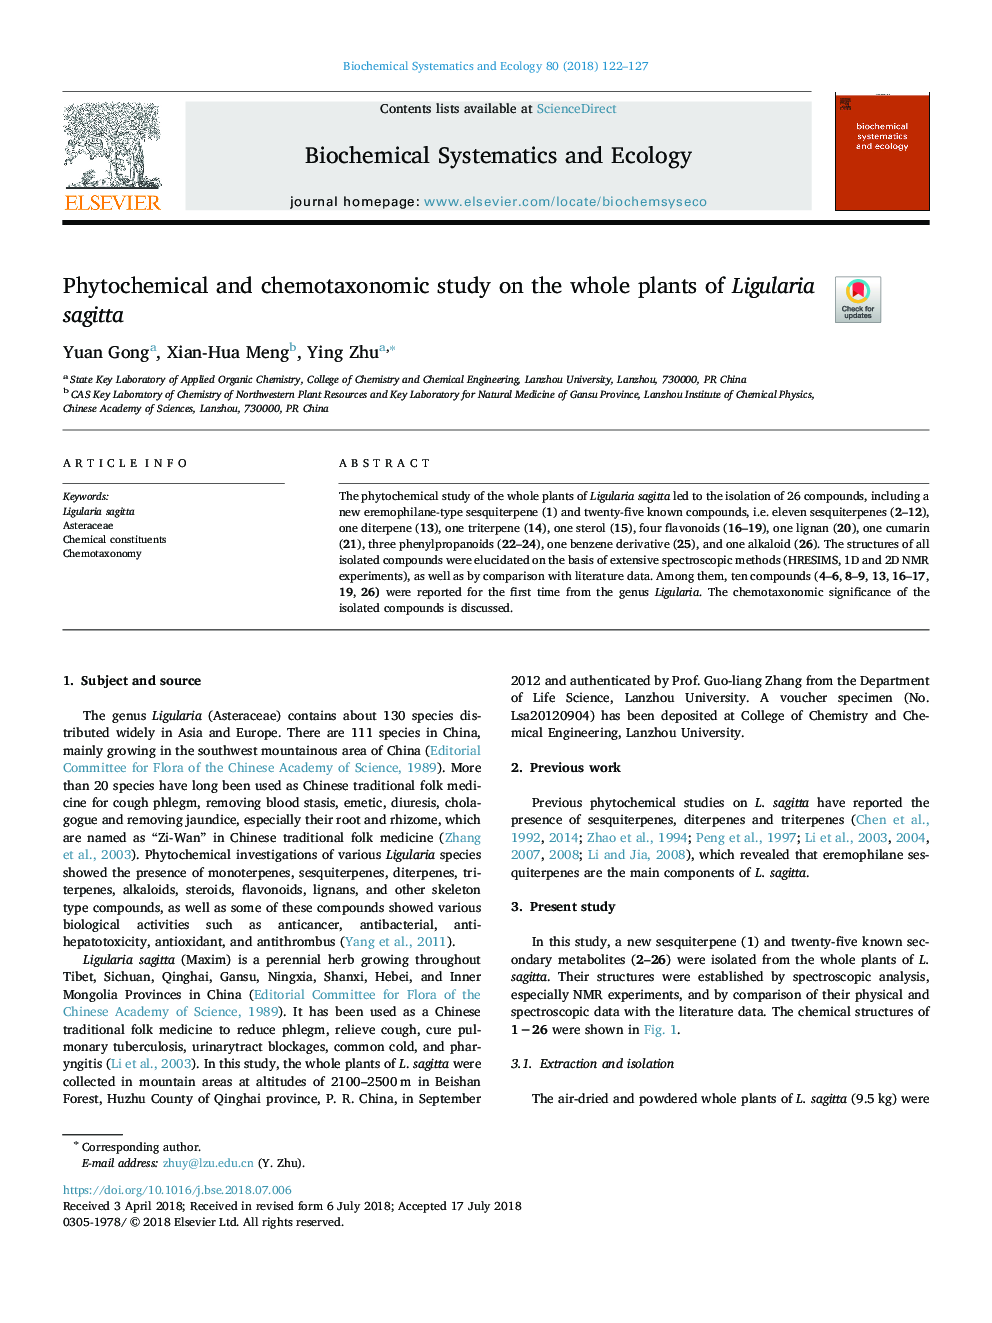 Phytochemical and chemotaxonomic study on the whole plants of Ligularia sagitta